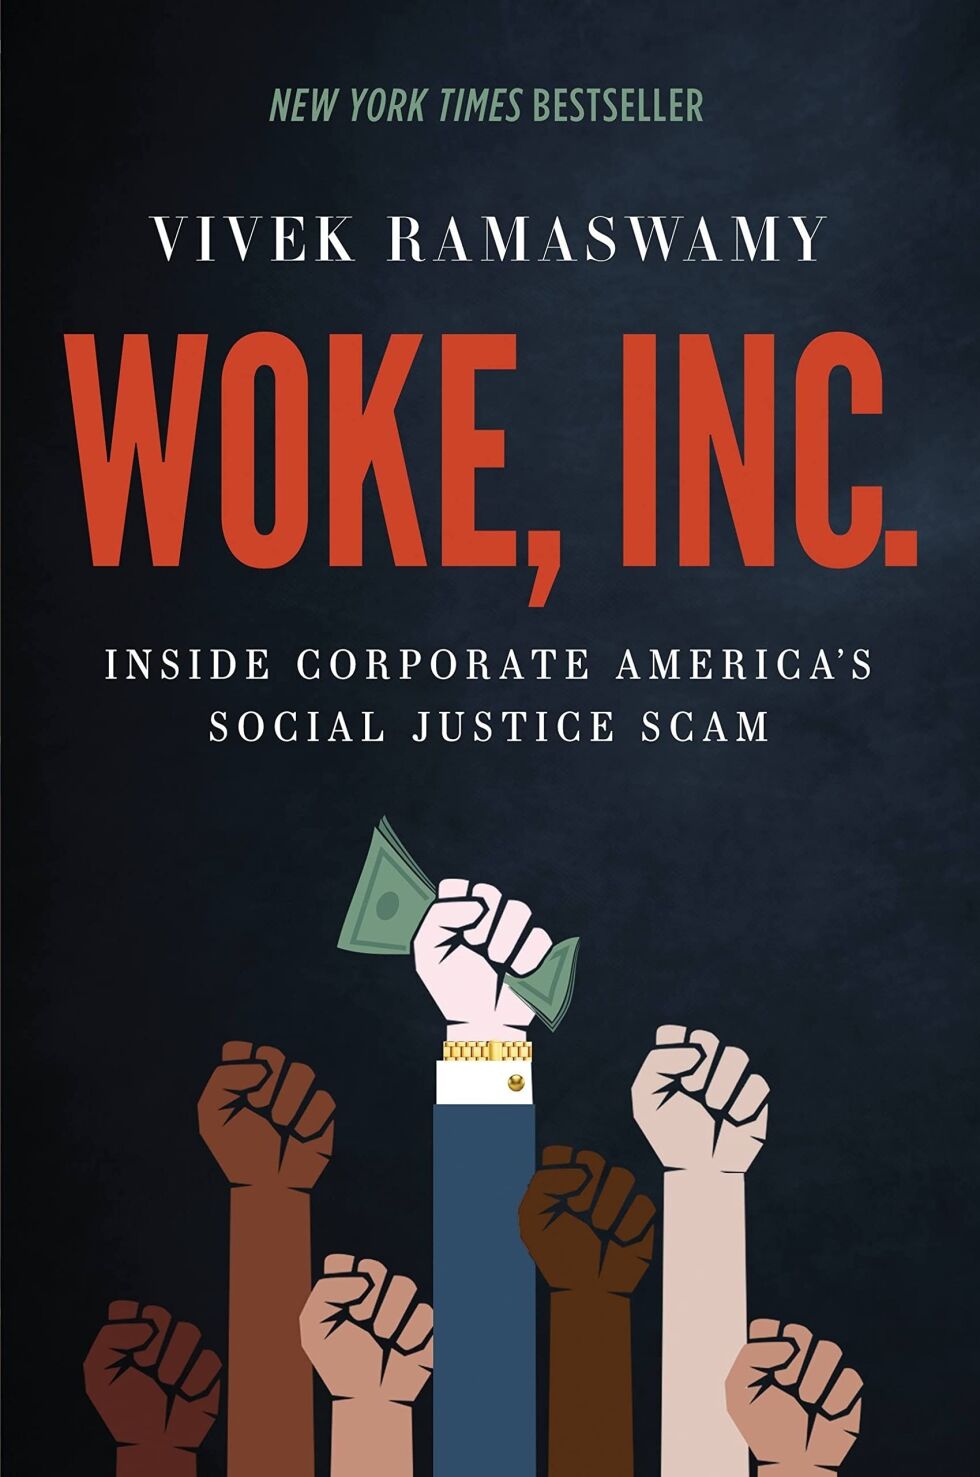 Bok: Woke, Inc. Inside corporate America's social justice scam.
 Foto: Amazon.com